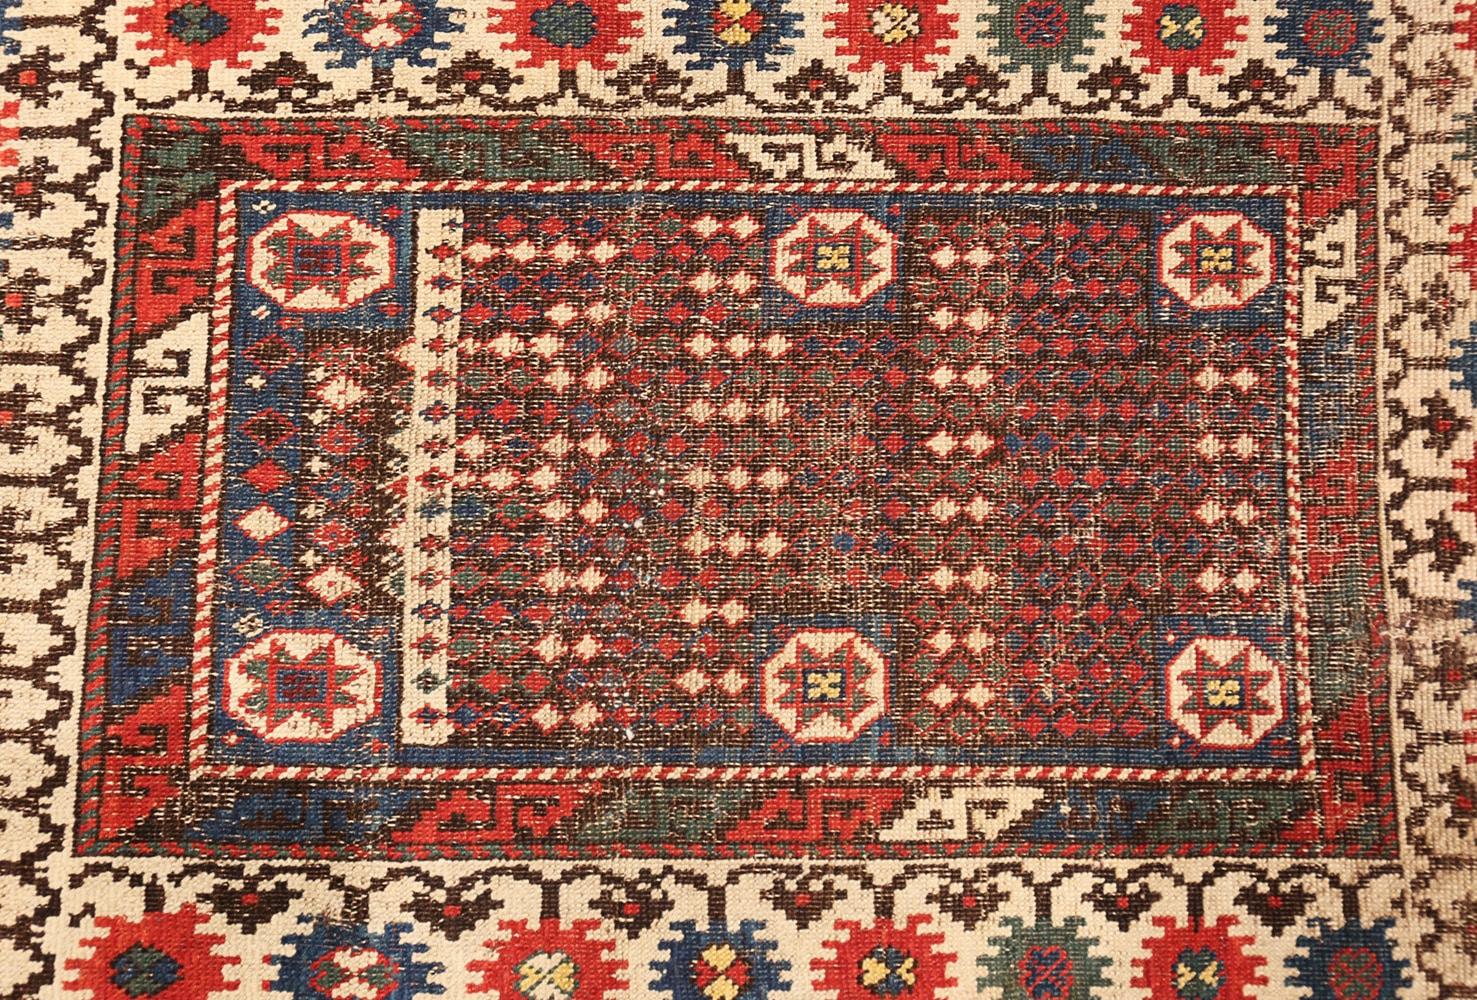 Small size tribal antique Caucasian Avar rug, country of origin: Caucasus, date circa 18th century. Size: 2 ft 7 in x 3 ft 10 in (0.79 m x 1.17 m). 

